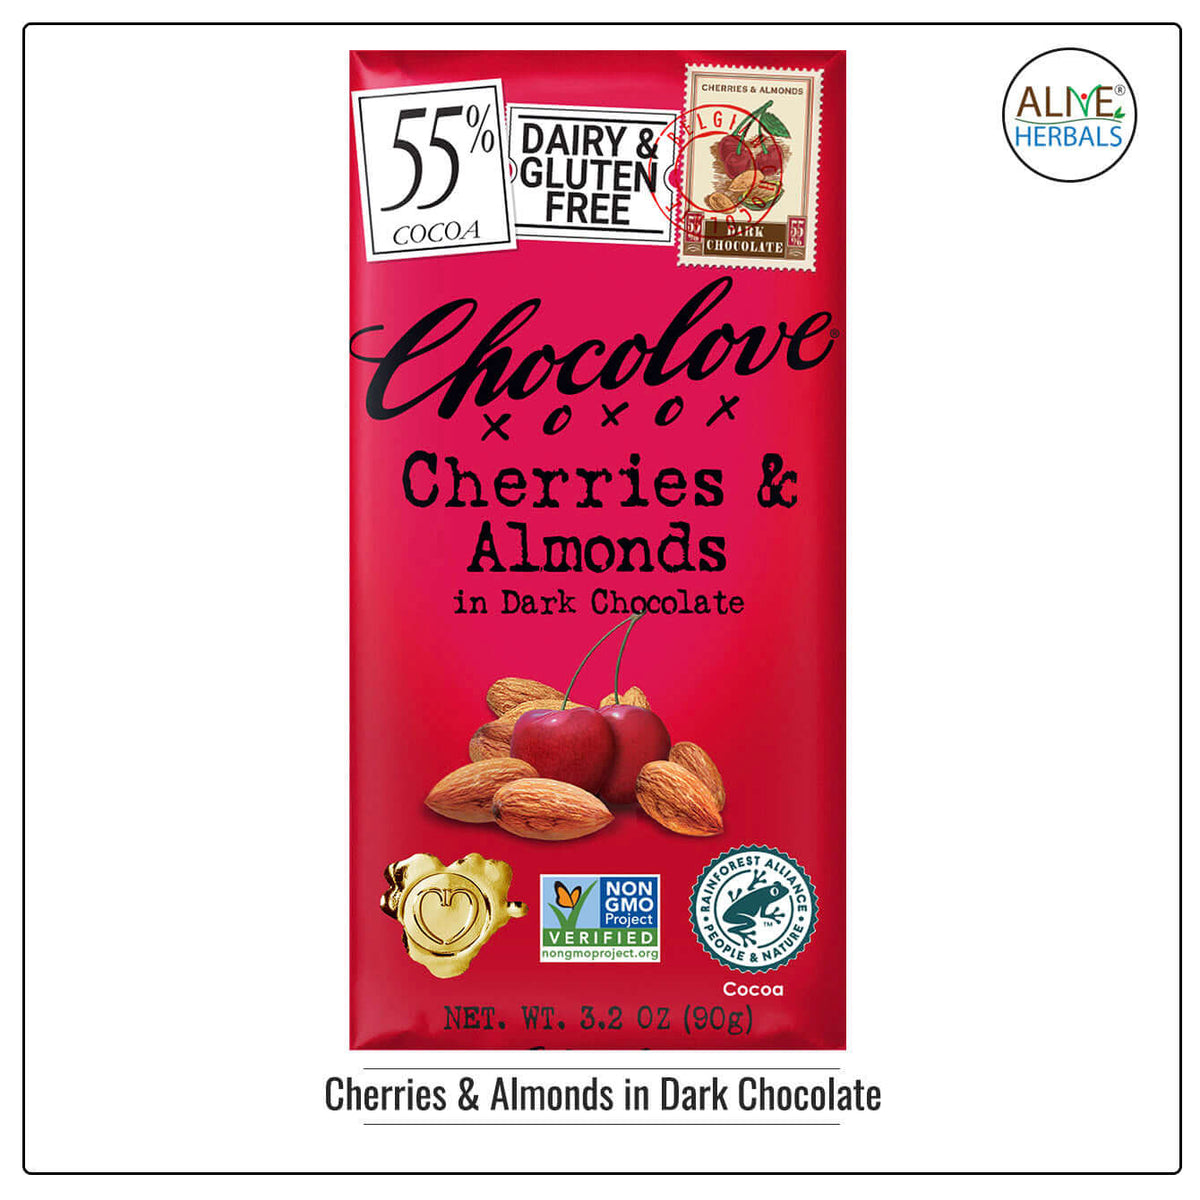 Cherries &amp; Almonds in Dark Chocolate - Buy at Natural Food Store | Alive Herbals.